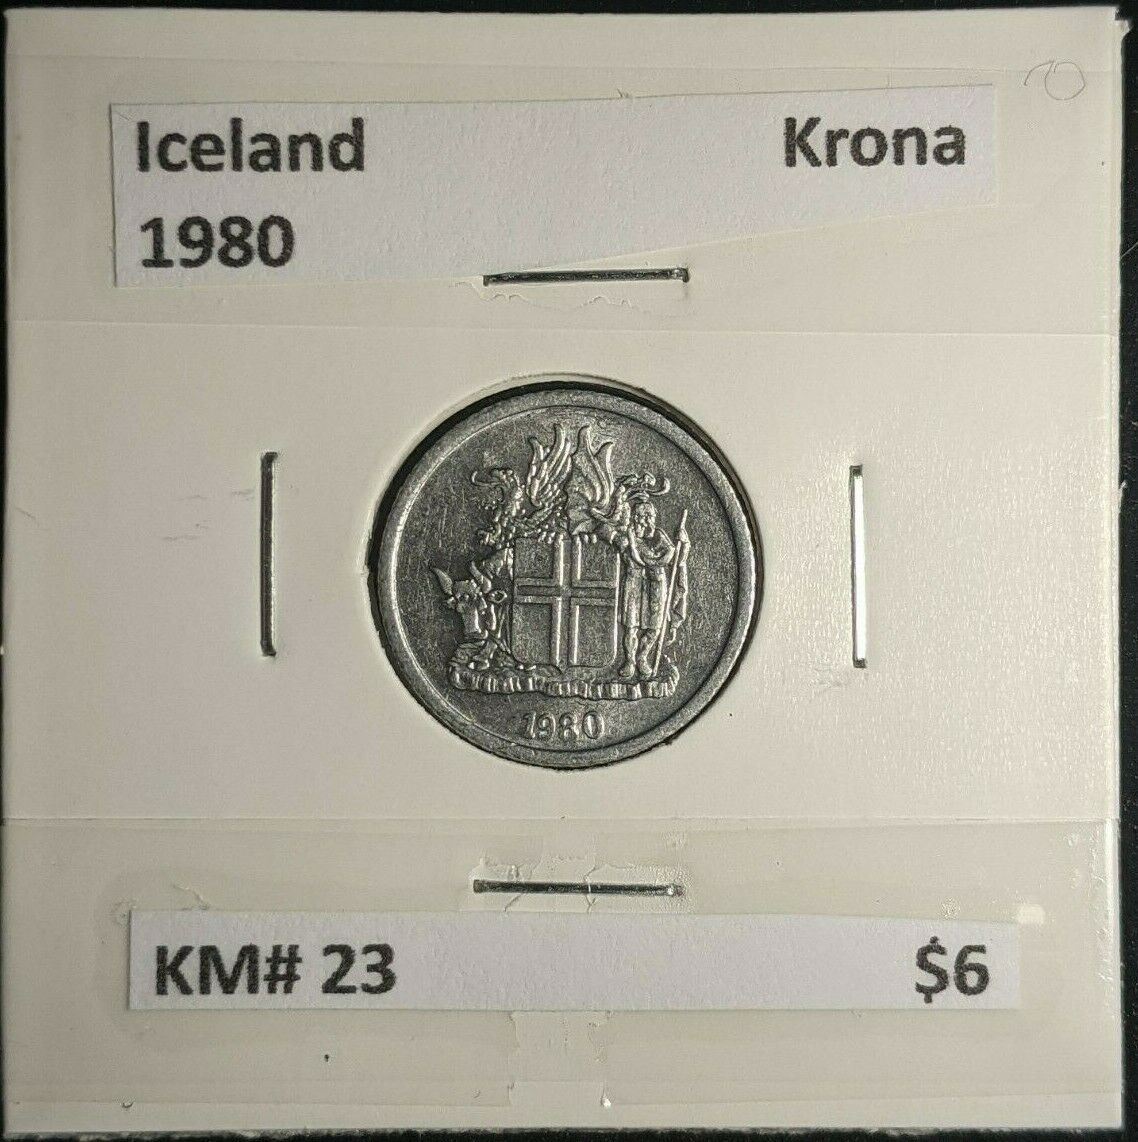 Iceland 1980 Krona KM# 23 #0648